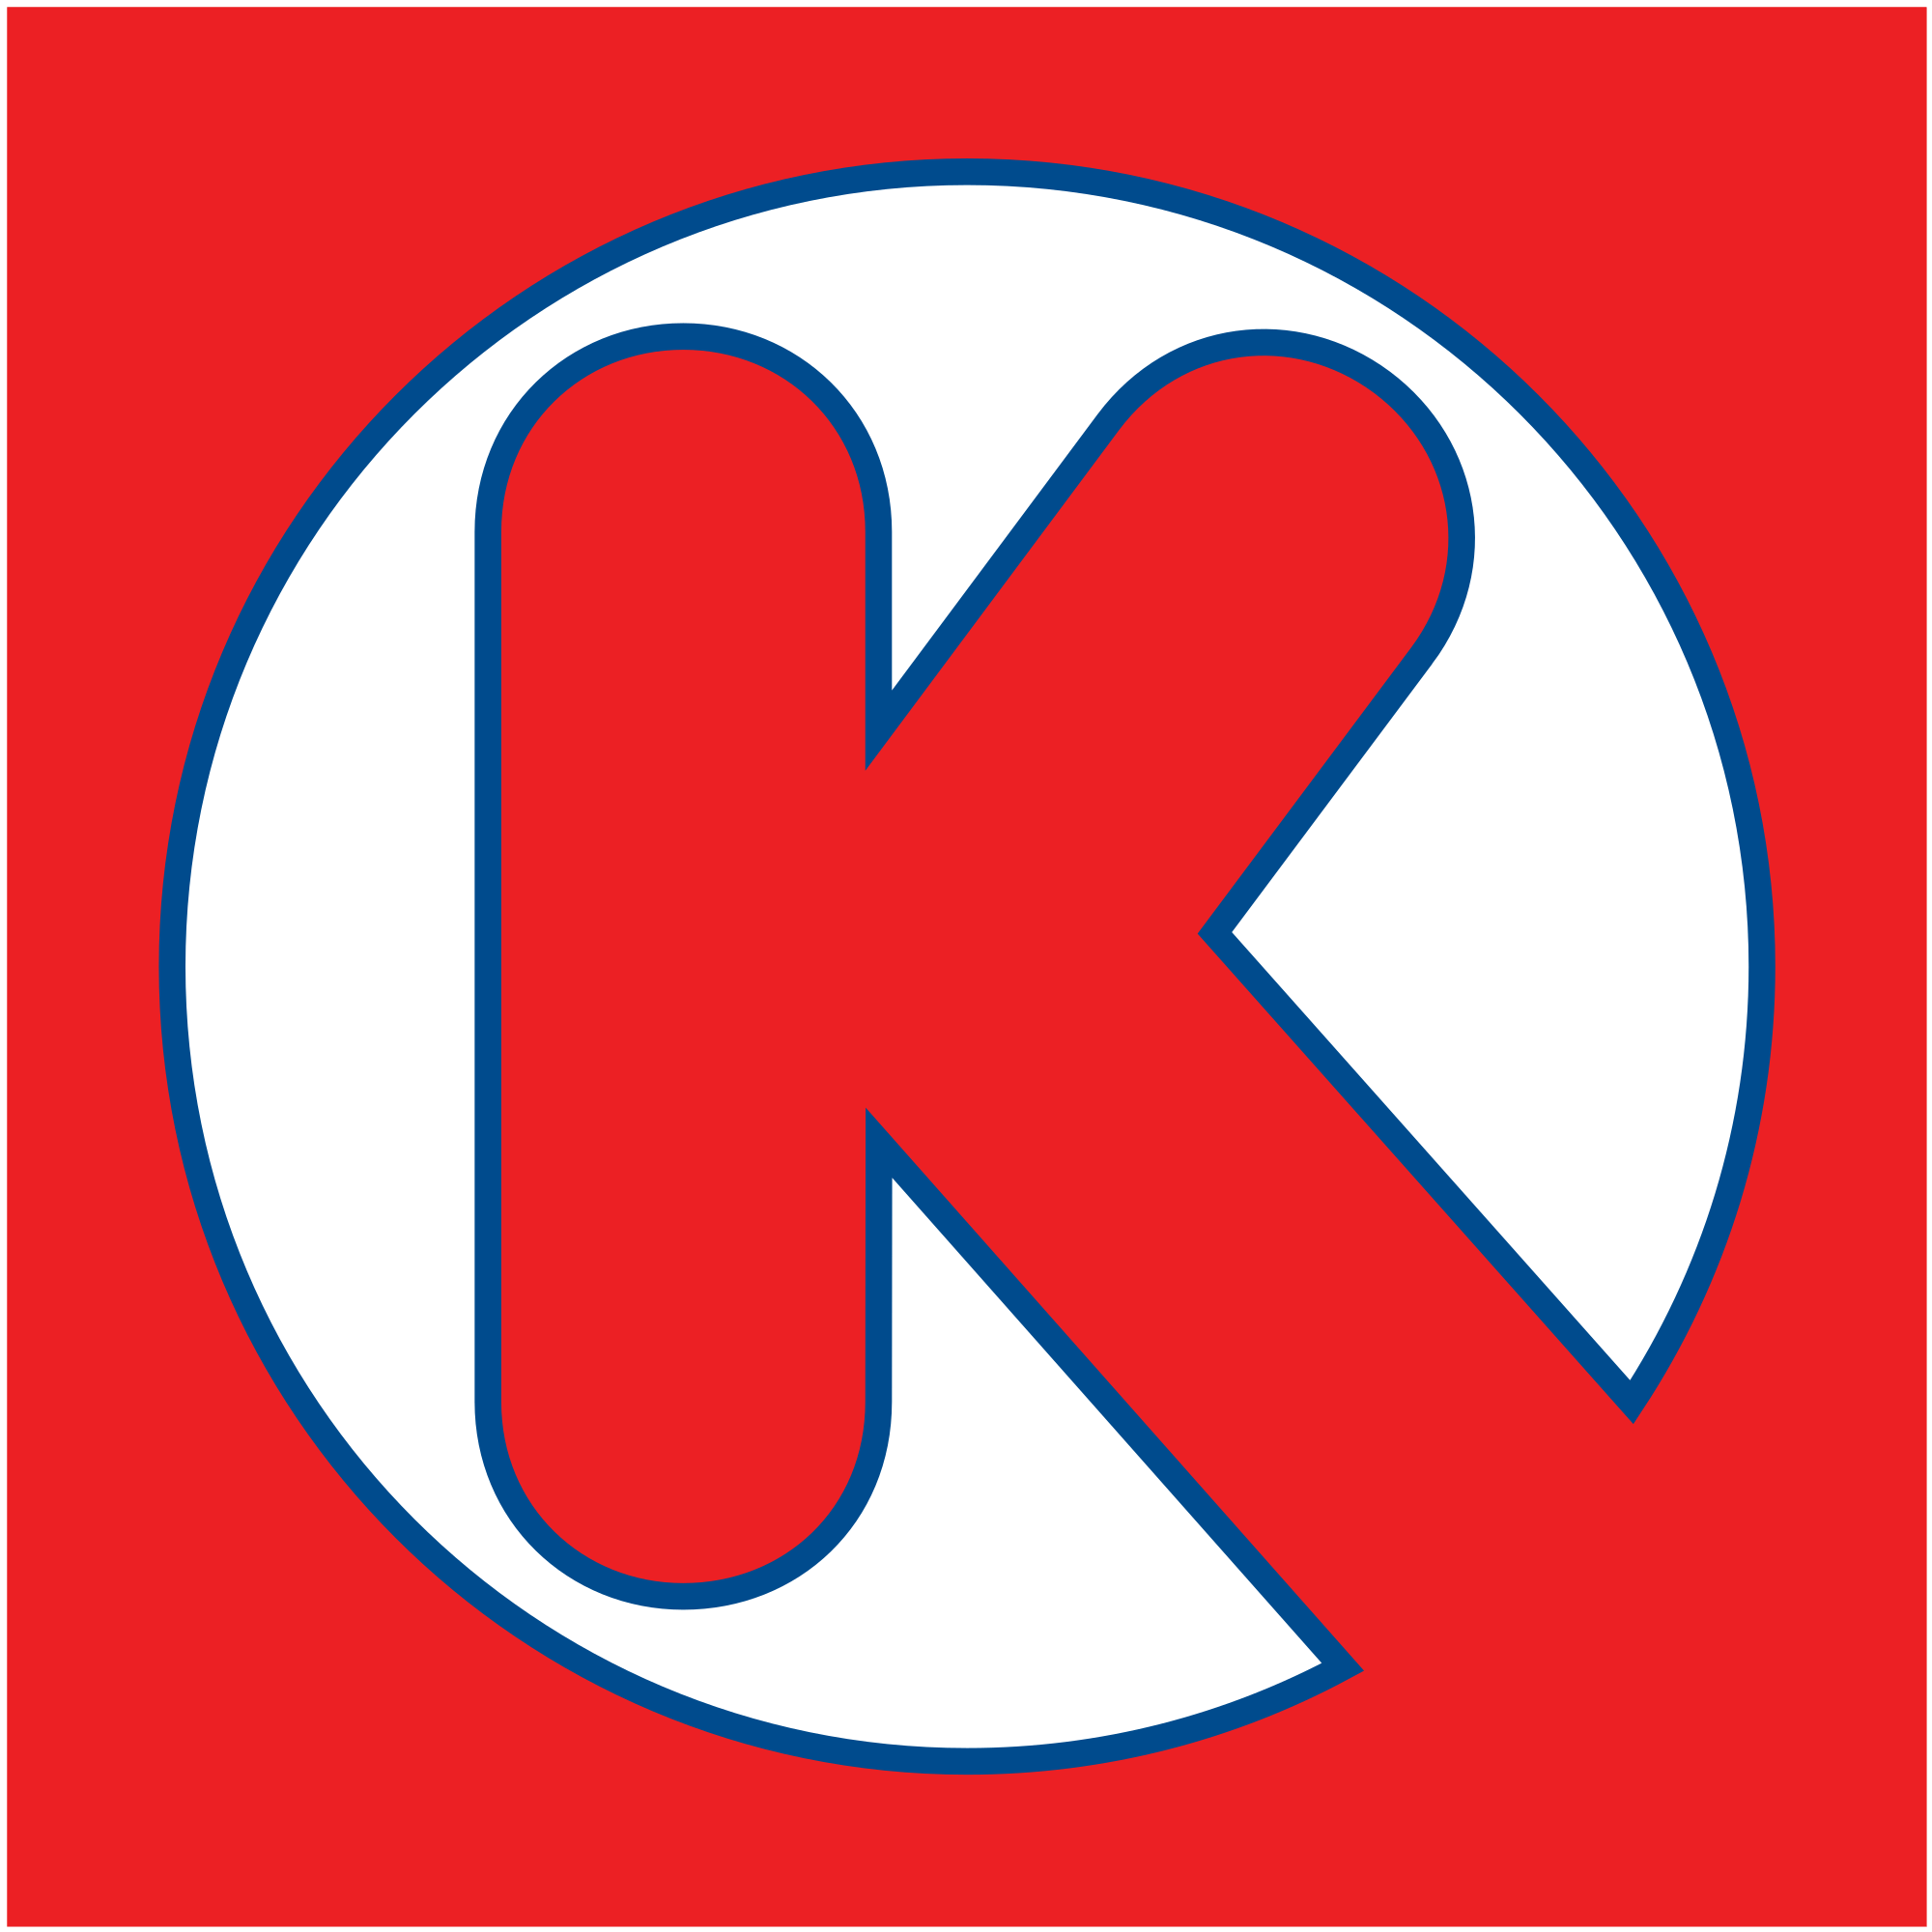 Circle K Logo - File:Circle K logo.svg - Wikimedia Commons